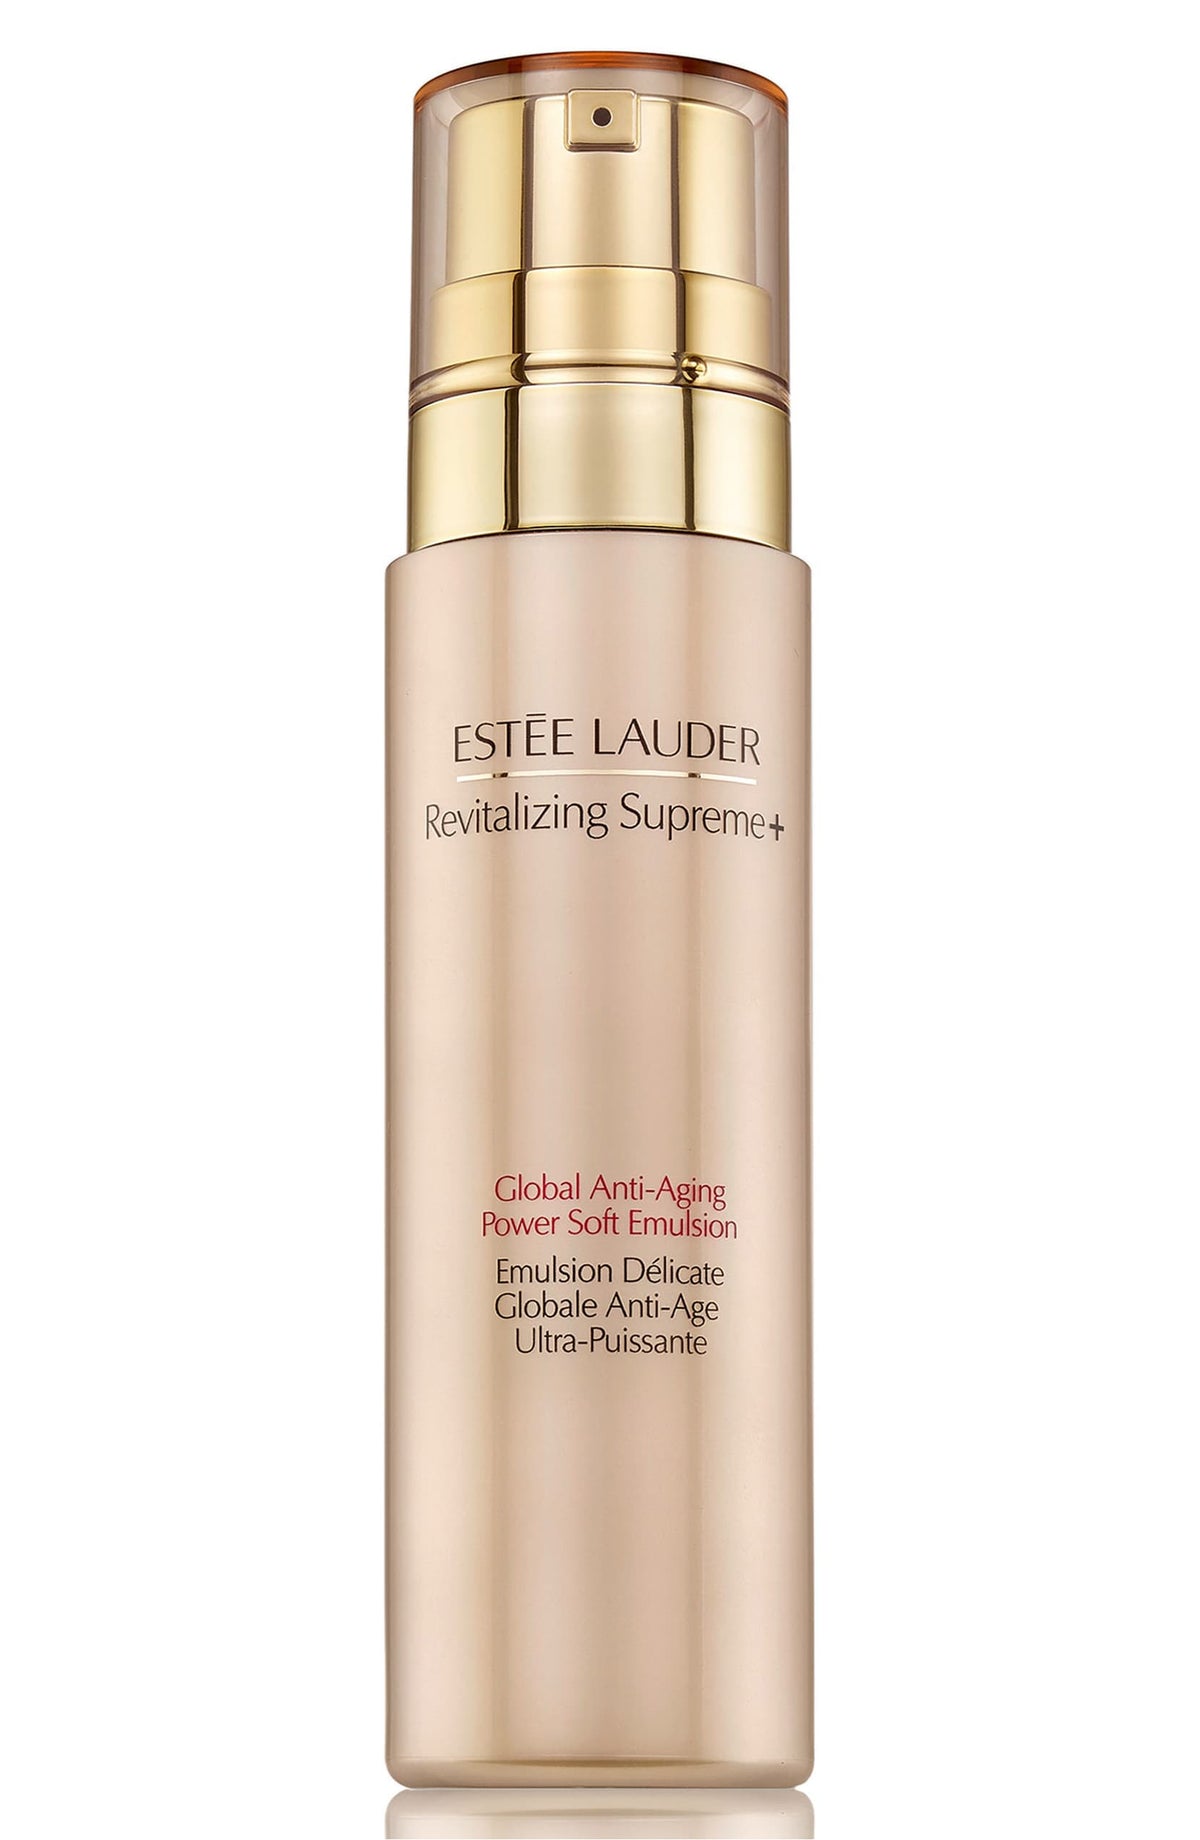 Estee Lauder Revitalizing Supreme+ Global Anti-Aging Power Soft Emulsion